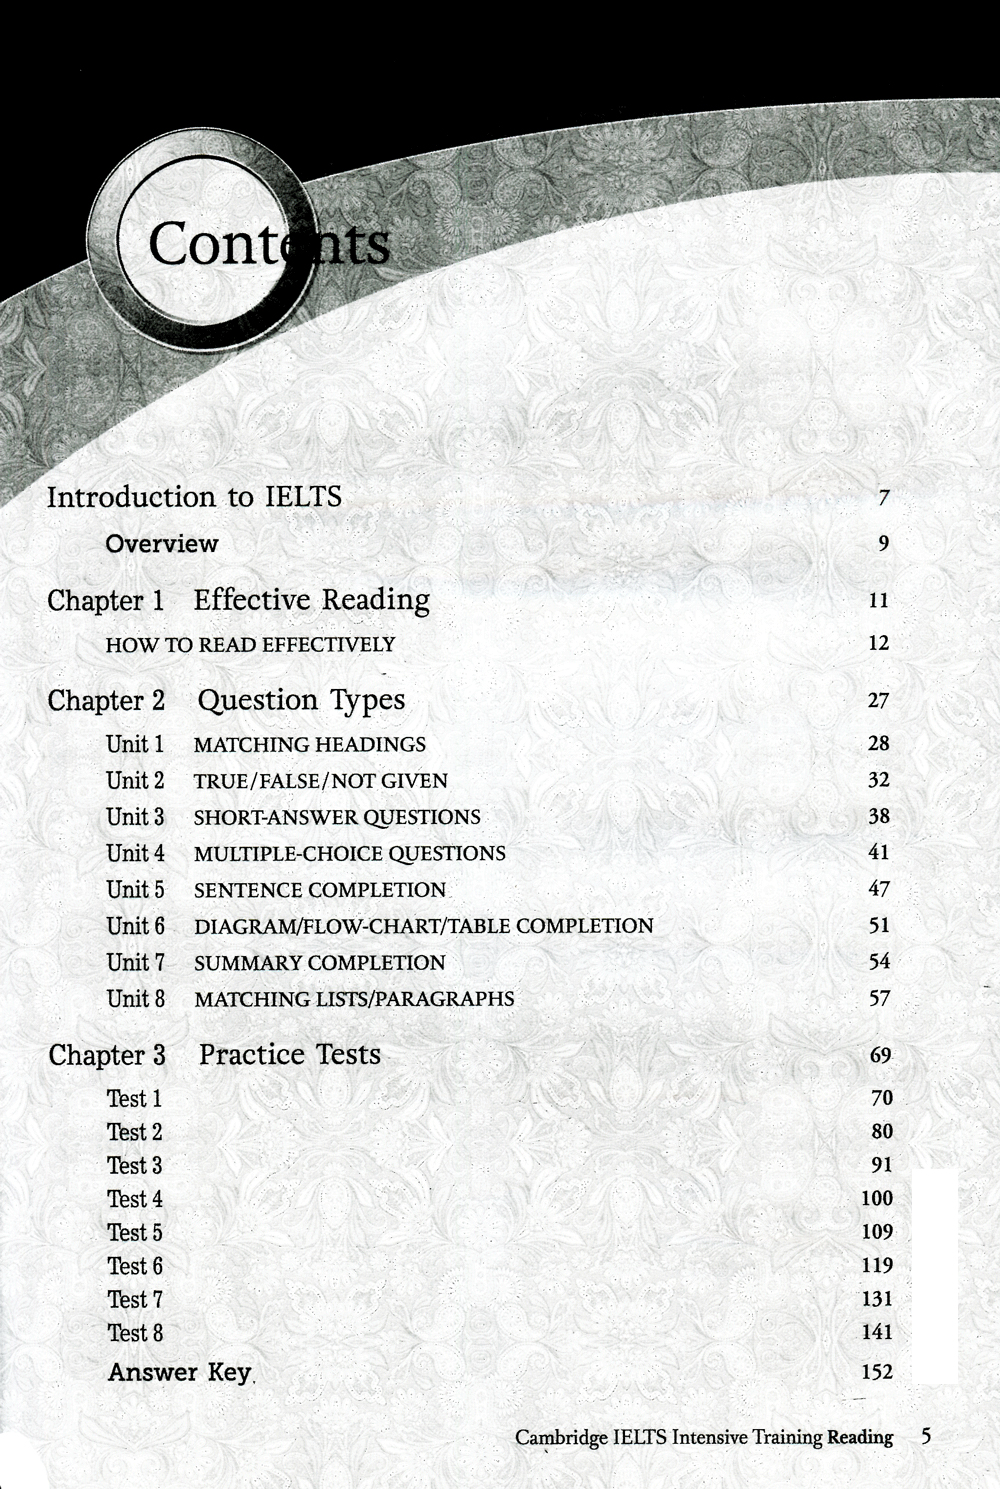 Cambridge Ietls Intensive Training - Reading PDF